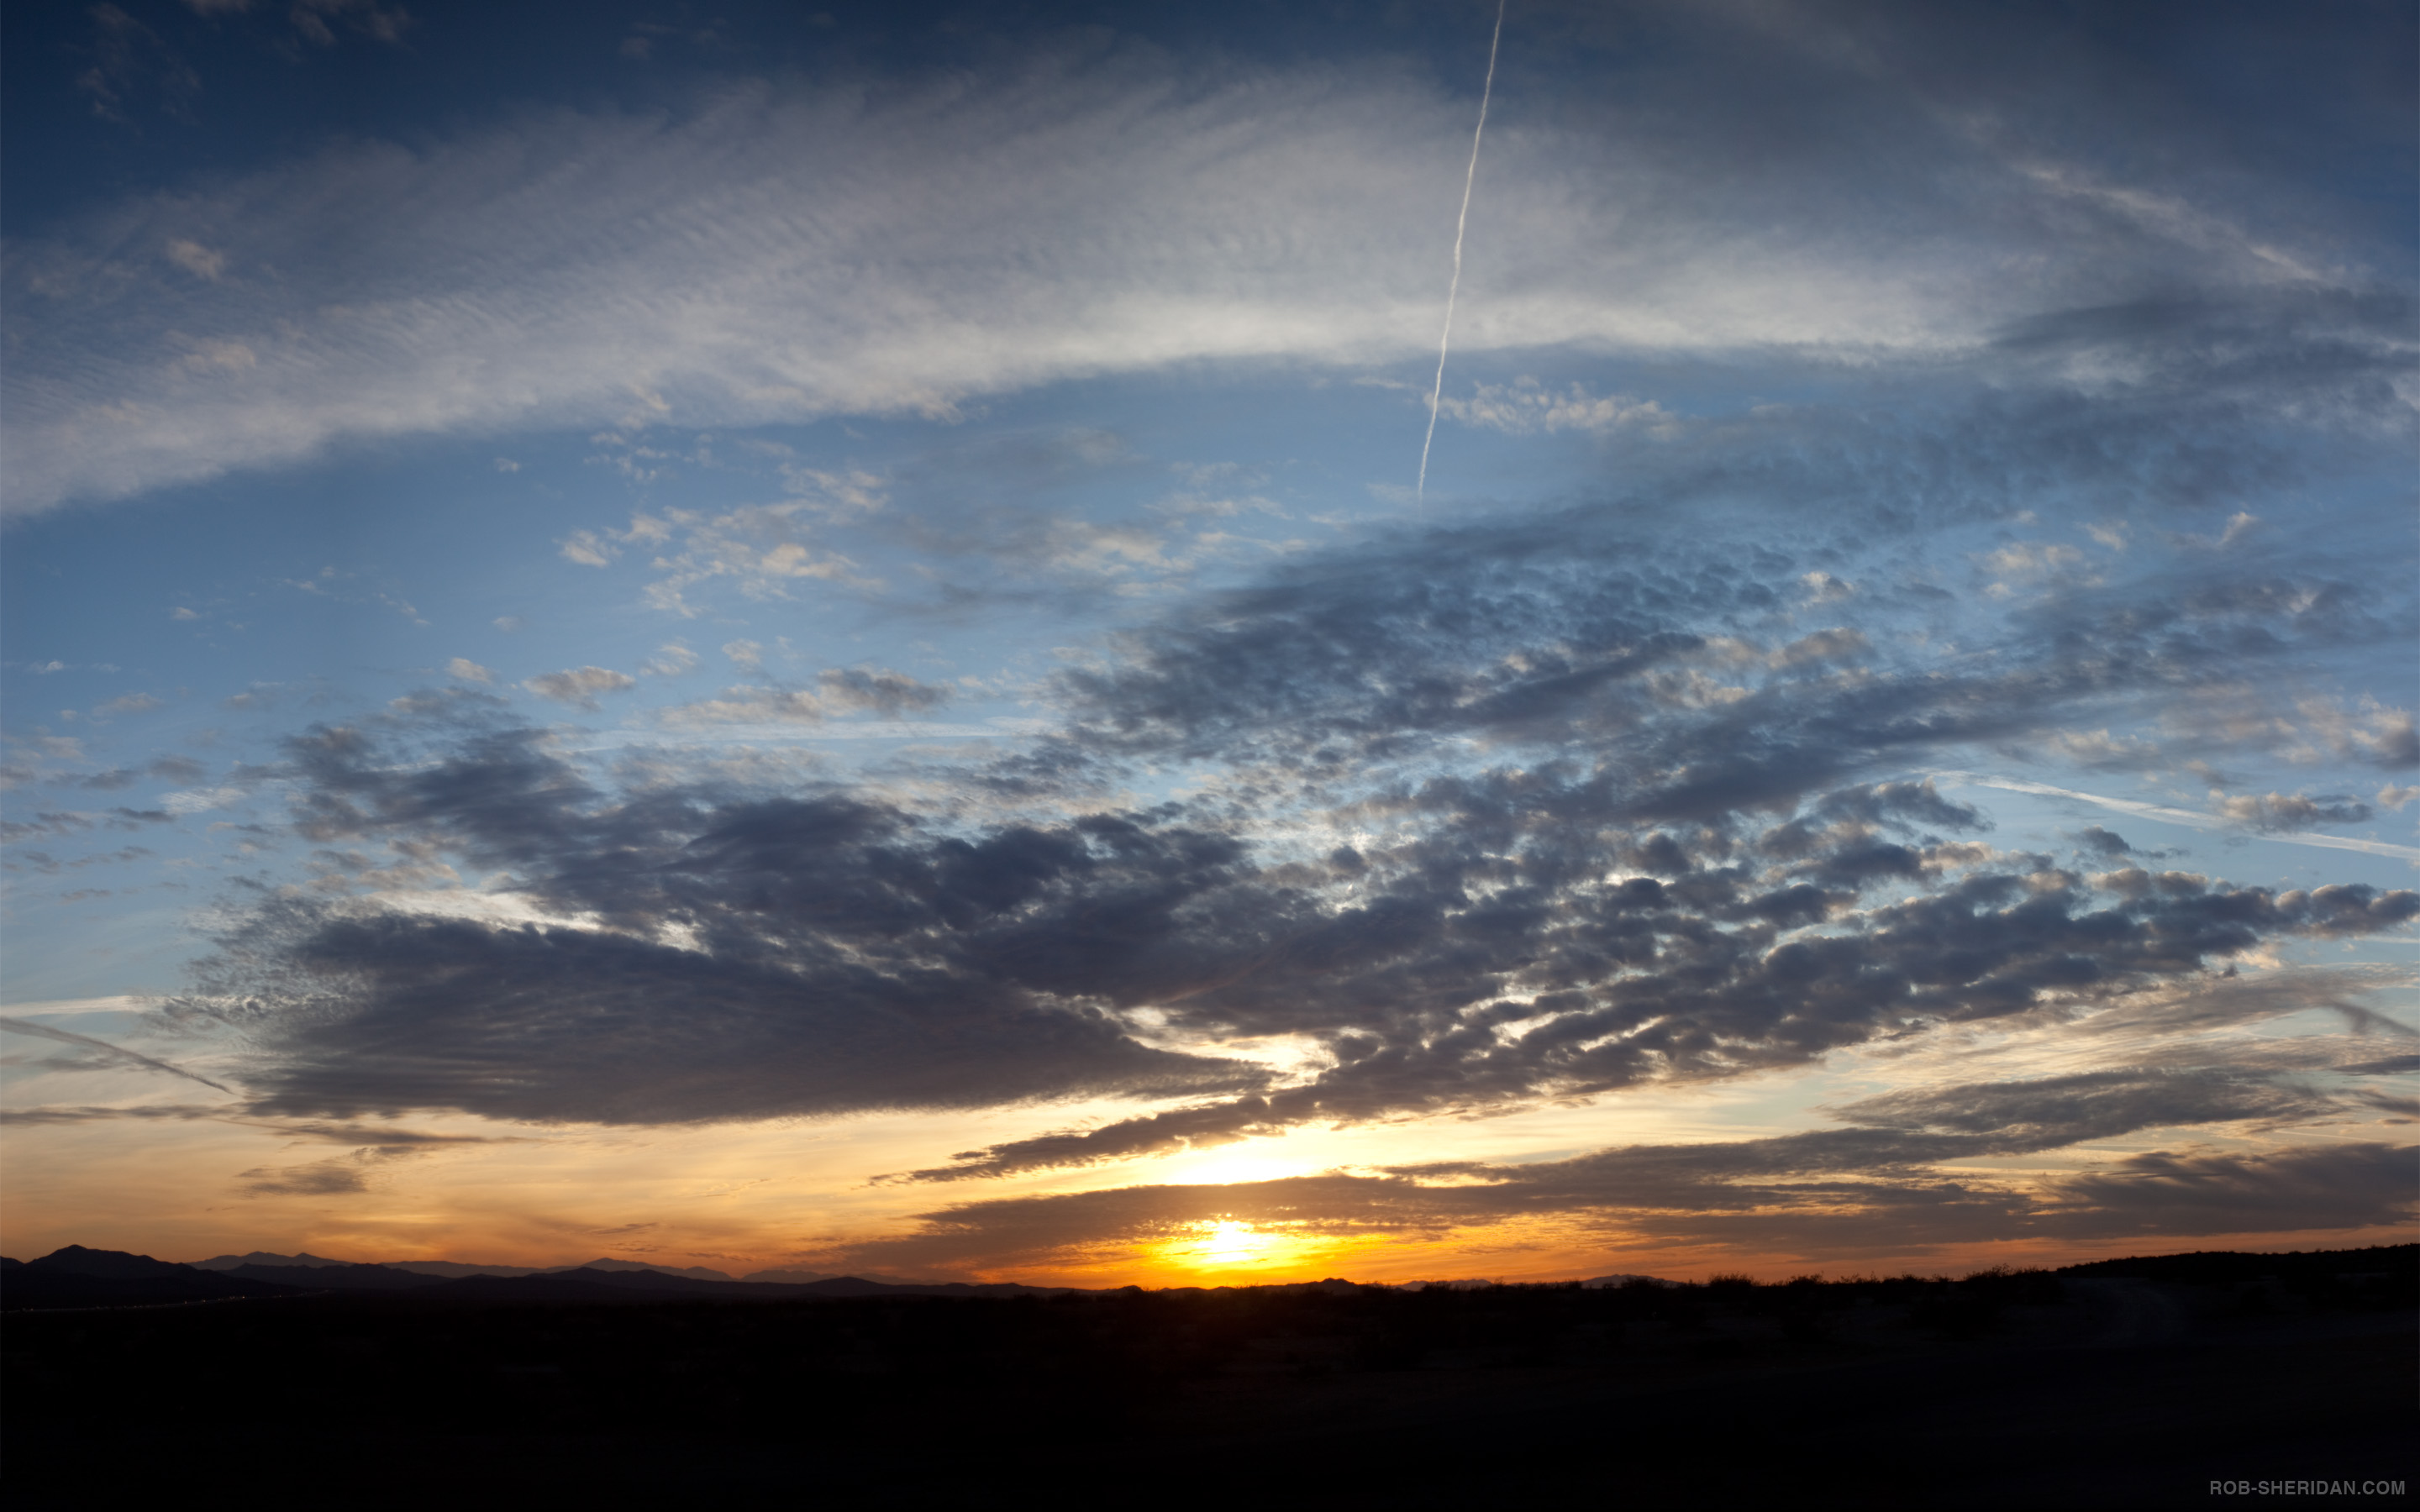 macbook proの網膜の壁紙2880x1800,空,雲,地平線,雰囲気,日没